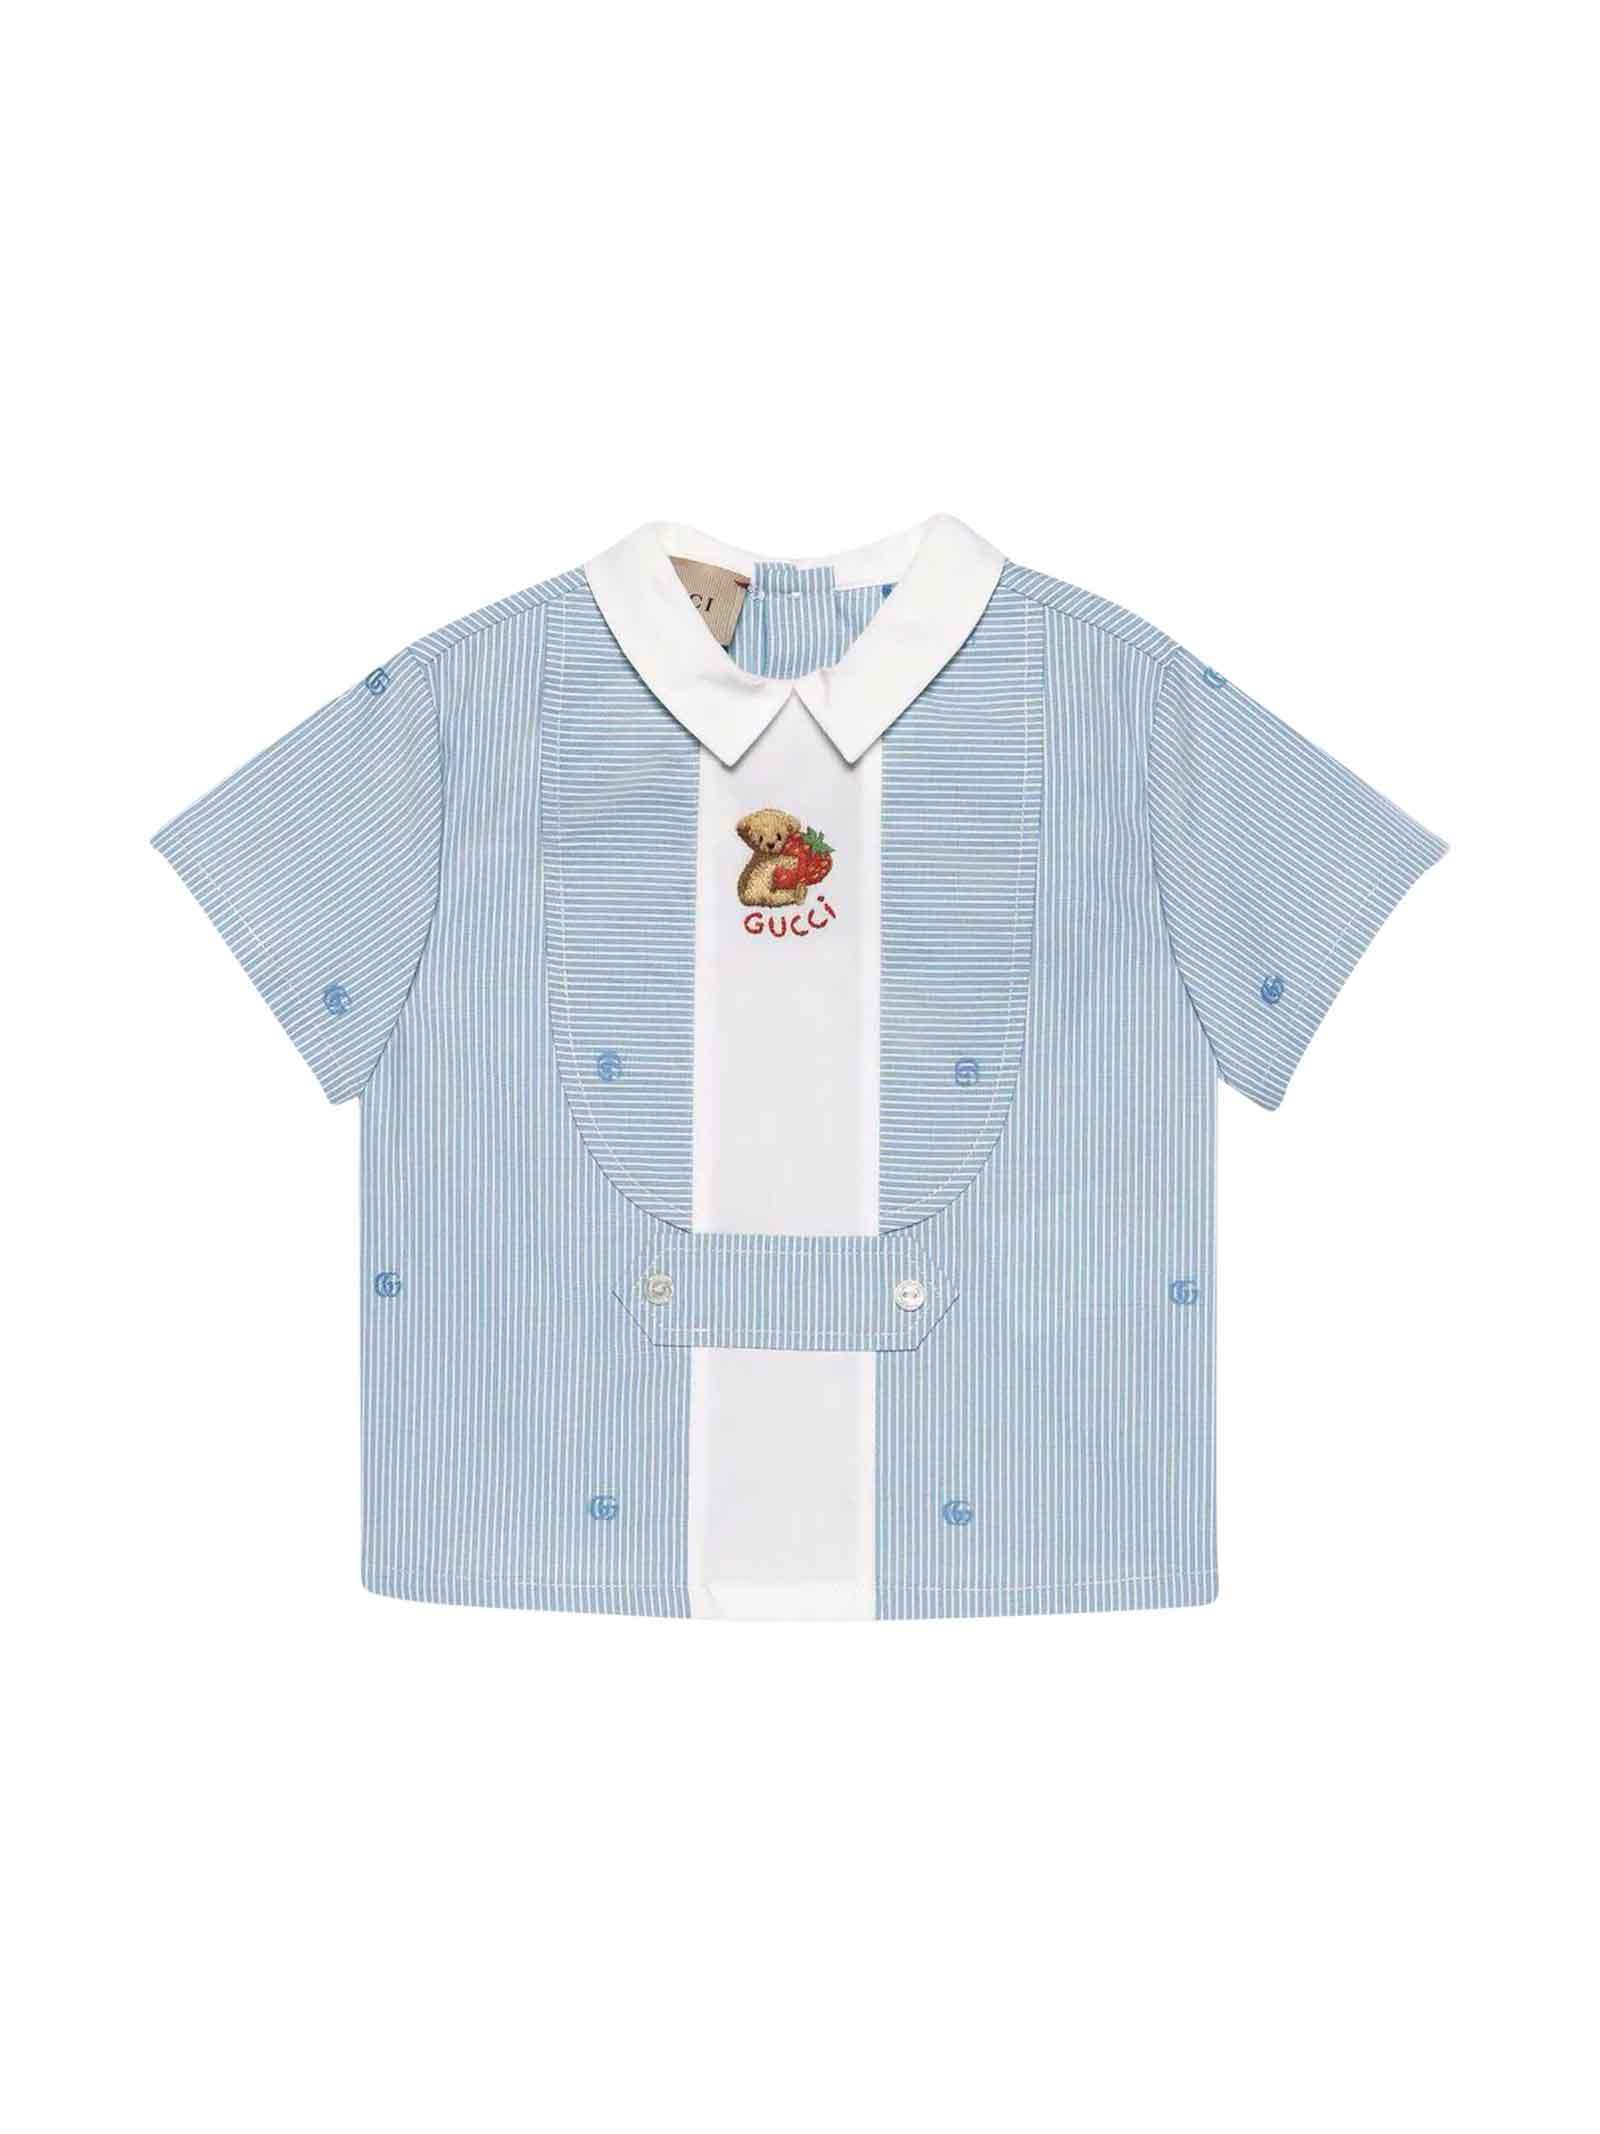 Gucci Blue Striped Shirt Baby Boy